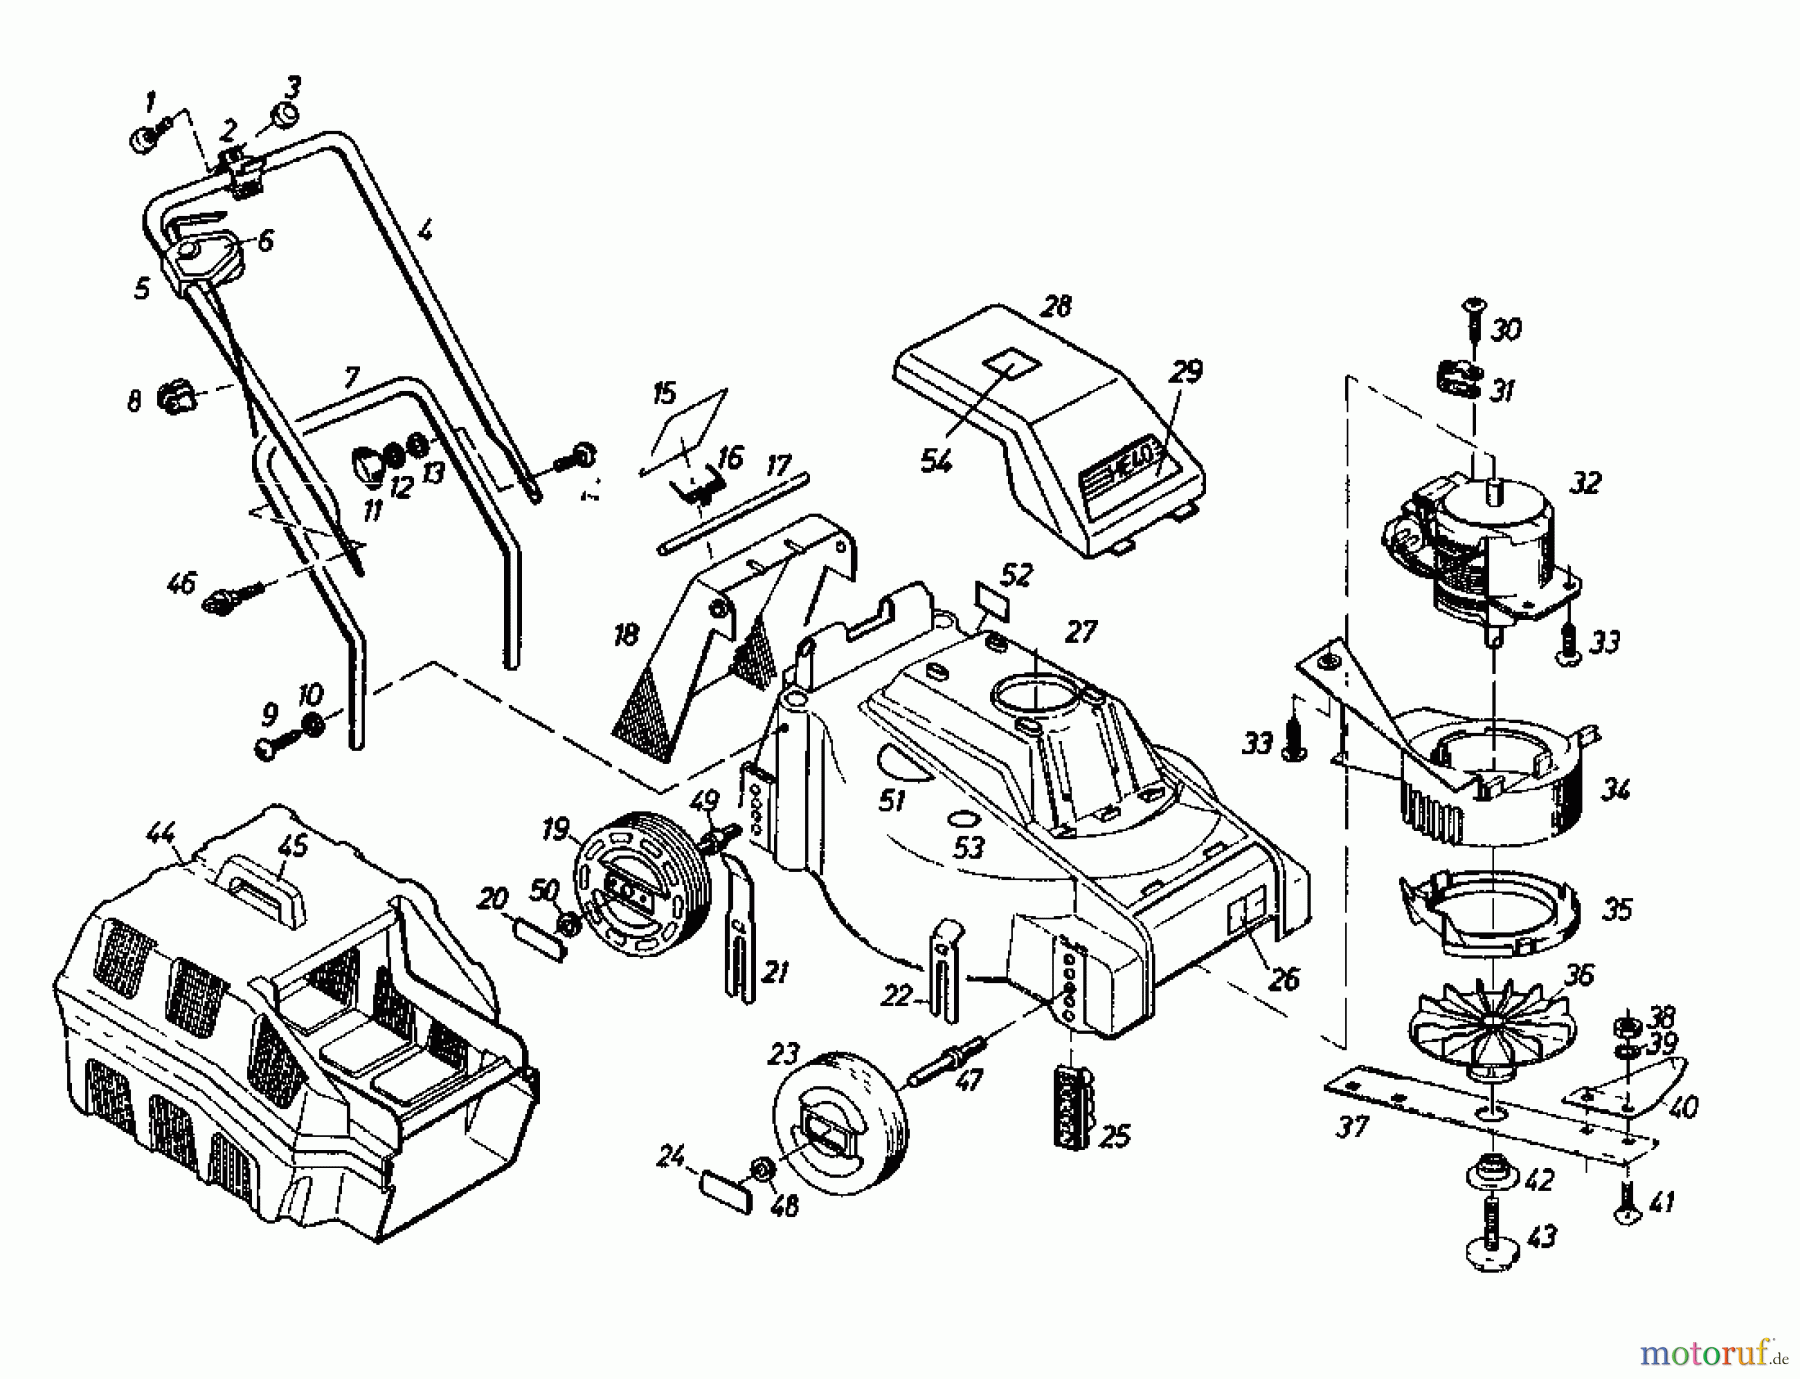  Gutbrod Electric mower HE 40 02889.04  (1987) Basic machine